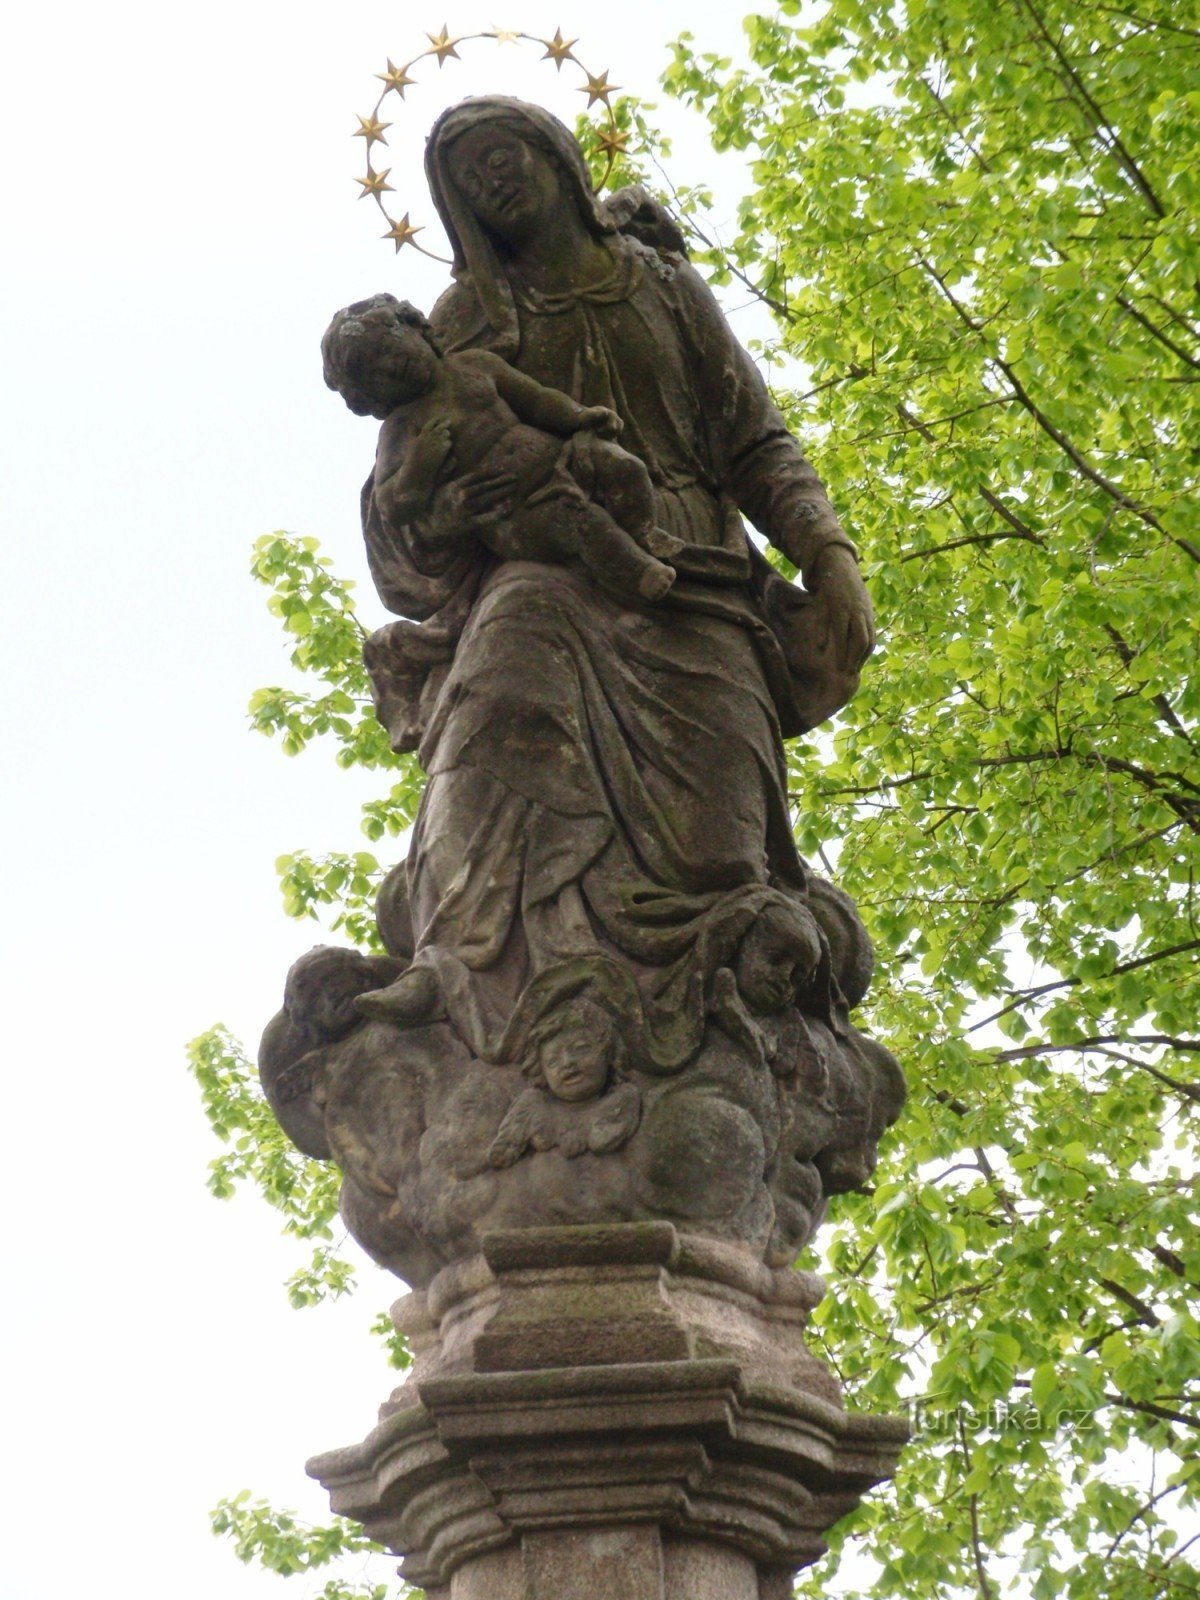 Žďár nad Sázavou - a column with a statue of the Virgin Mary